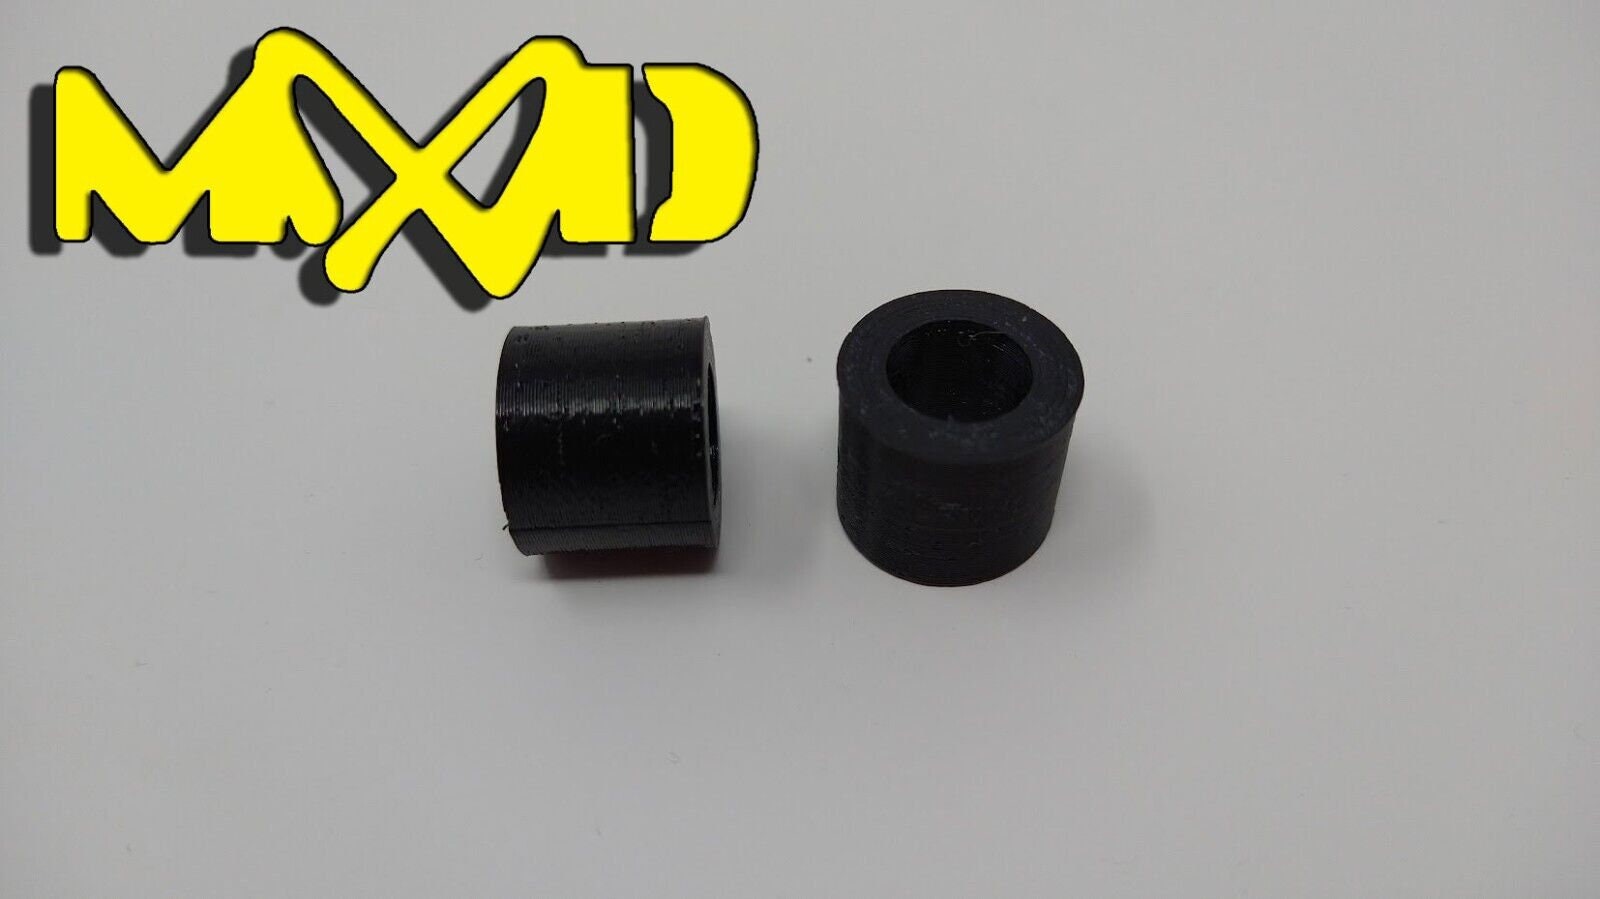 ONE DAY HANDLING] x2 Cricut Maker Rubber Roller Replacement,Black